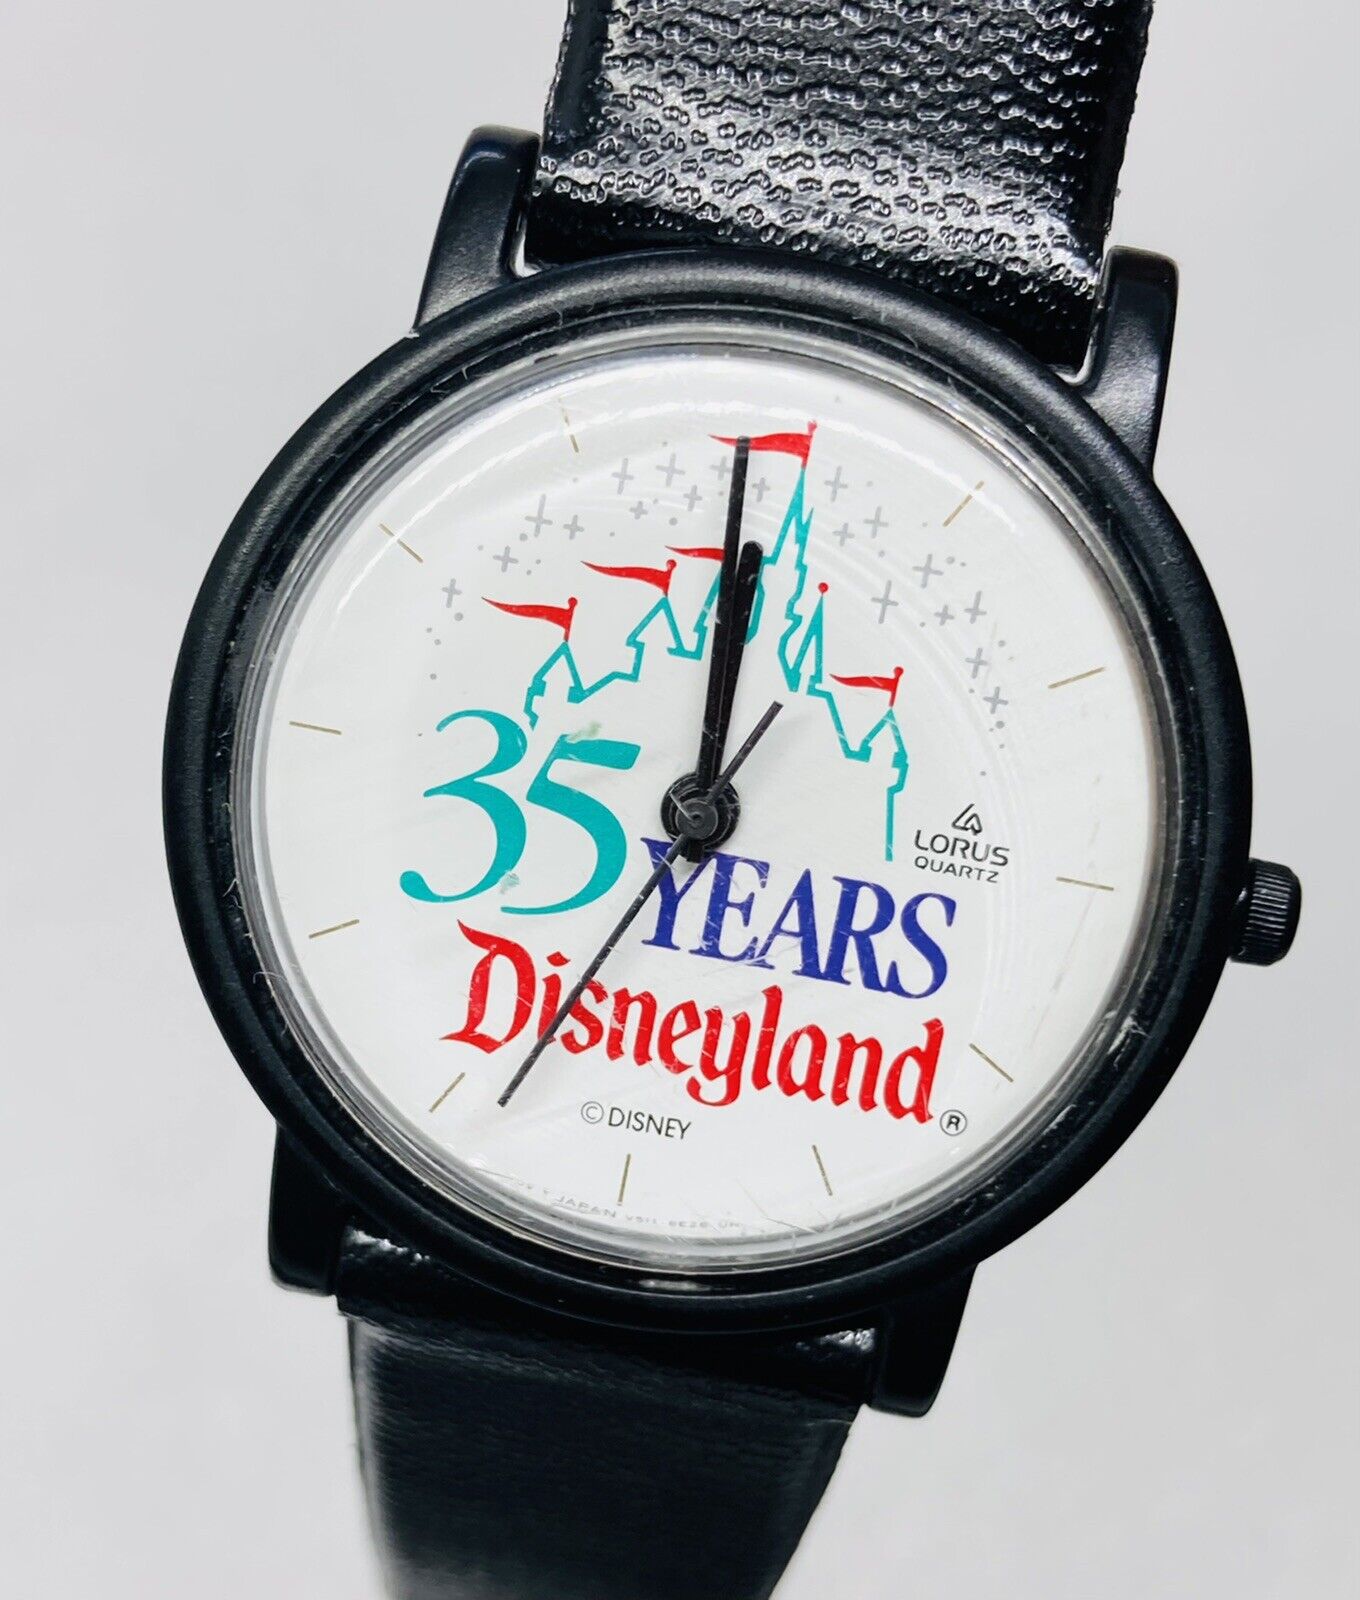 Vintage 1990 Lorus Disney Wristwatch Disneyland 35 Years Anniversary Castle 11